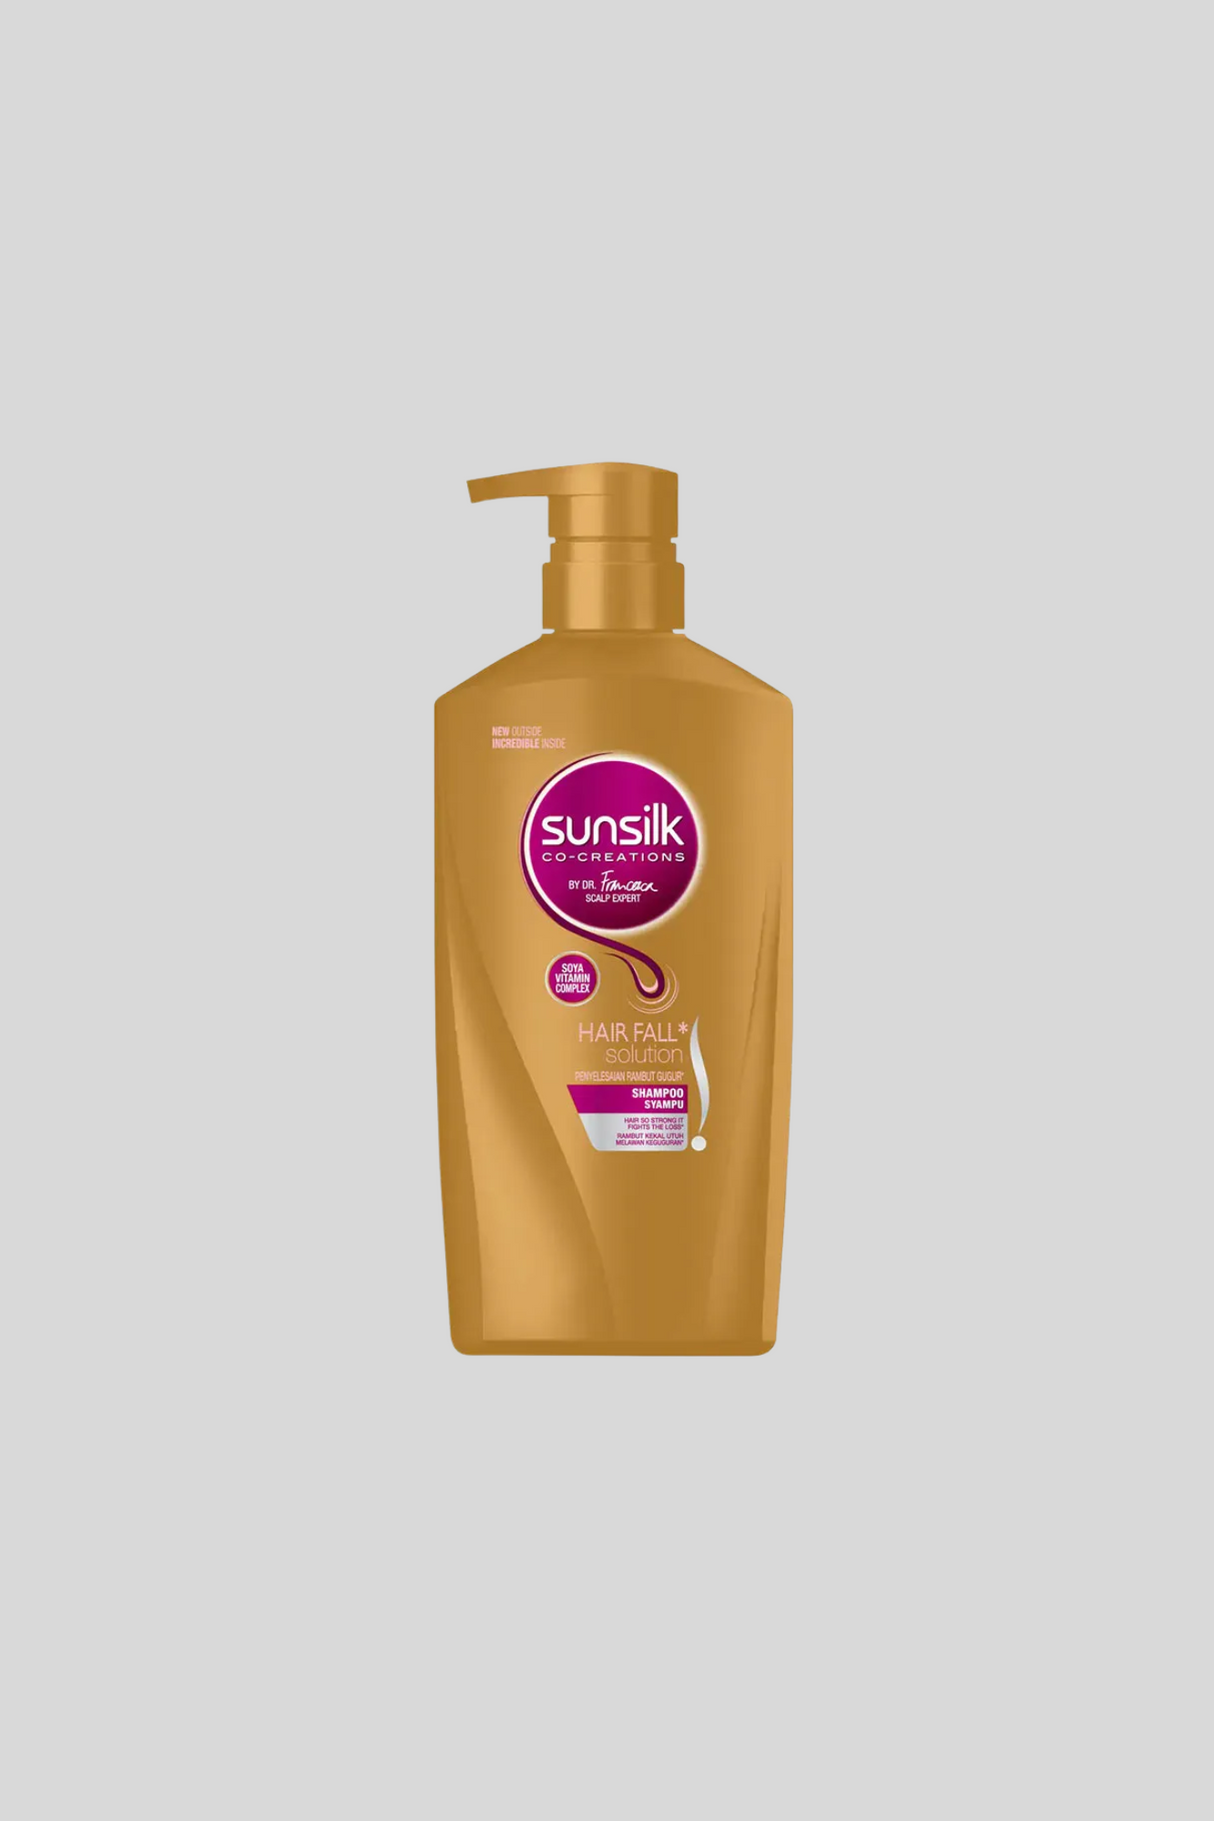 sunsilk shampoo hair fall solution 660ml